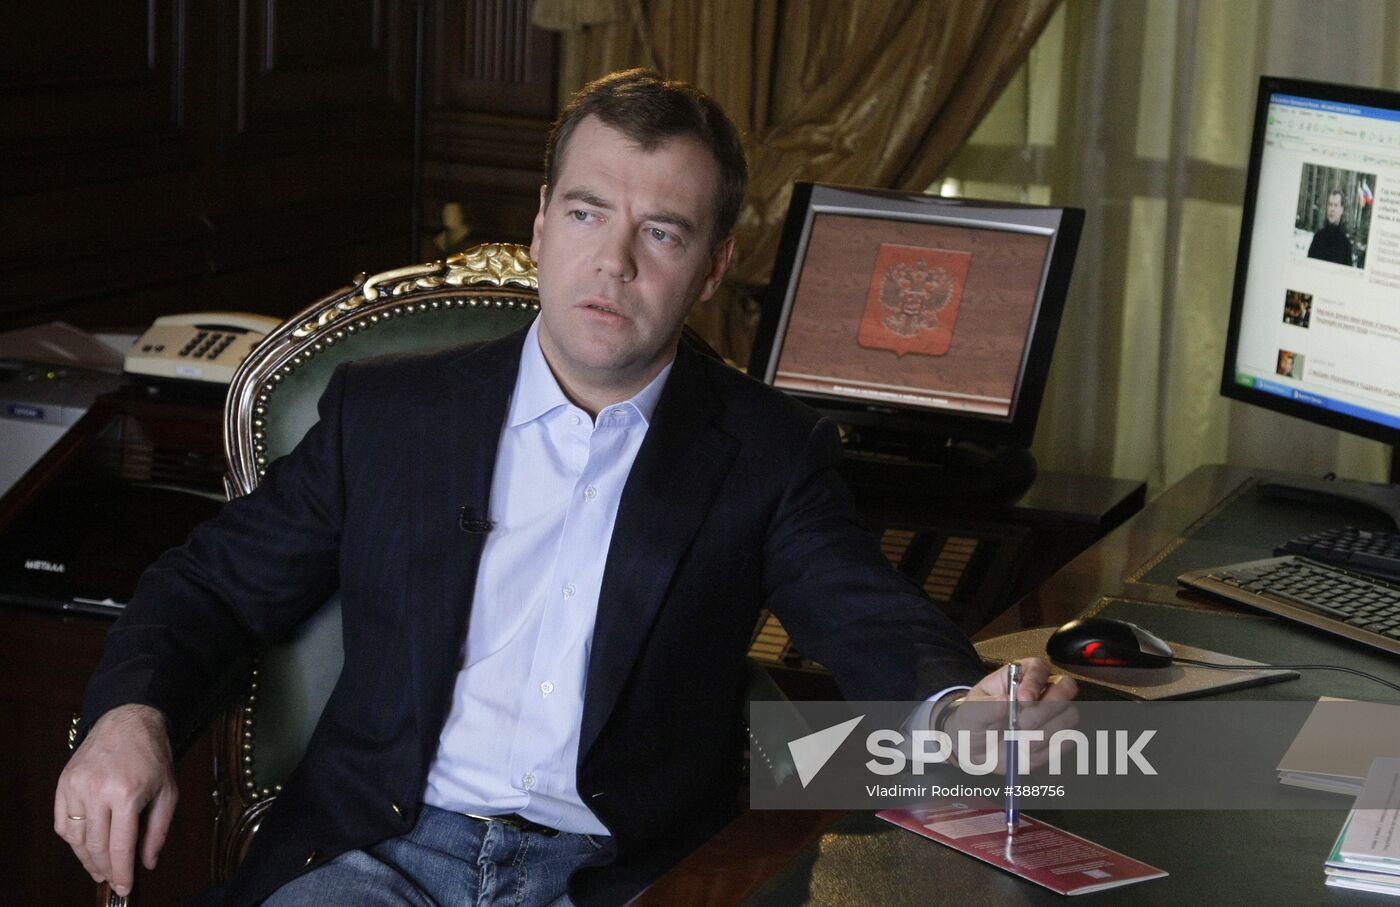 Dmitry Medvedev recording video address